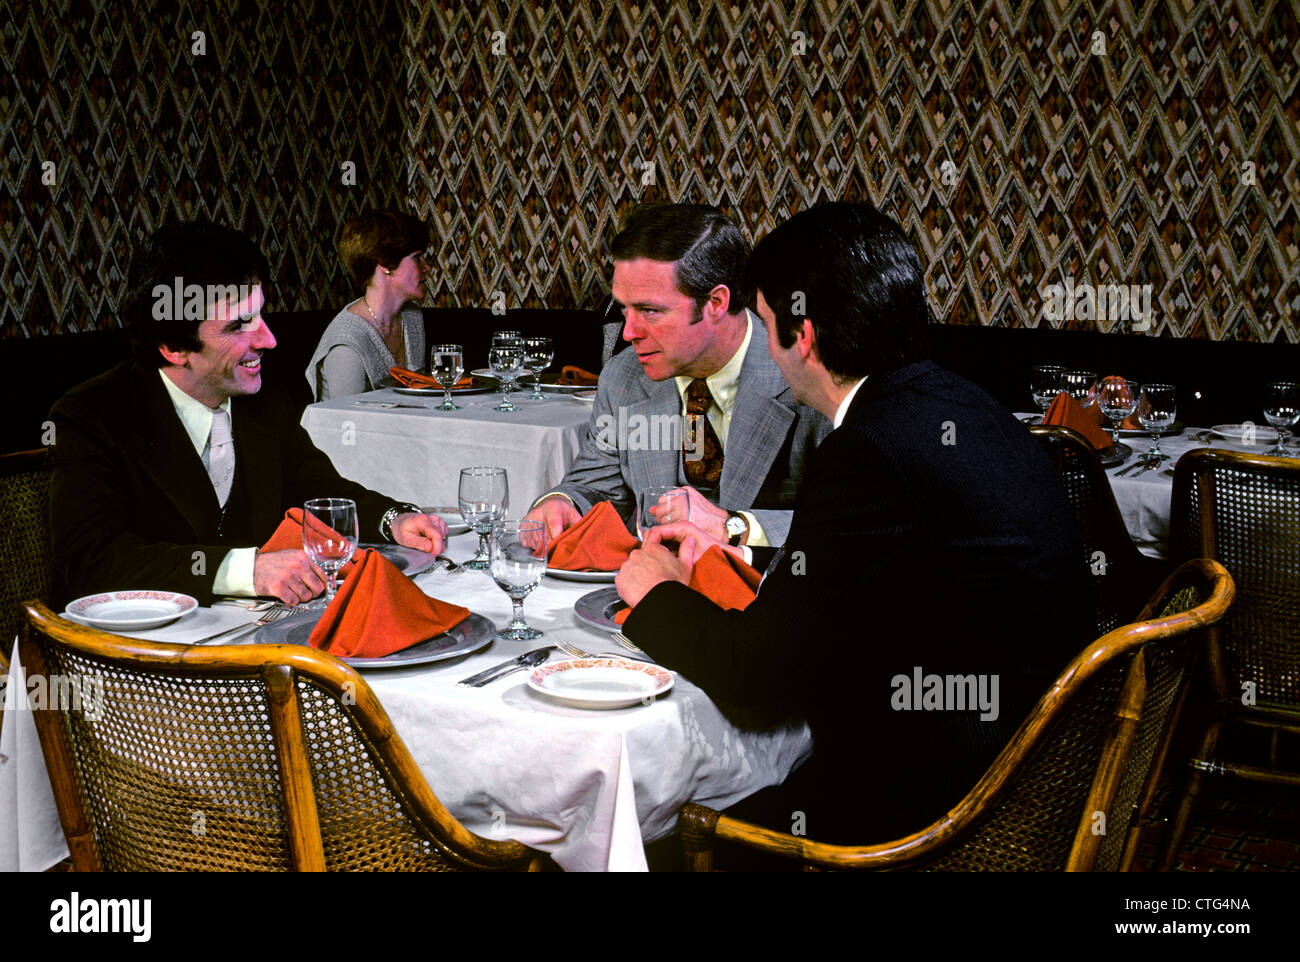 1970s 3 BUSINESSMEN AT TABLE IN RESTAURANT Stock Photo